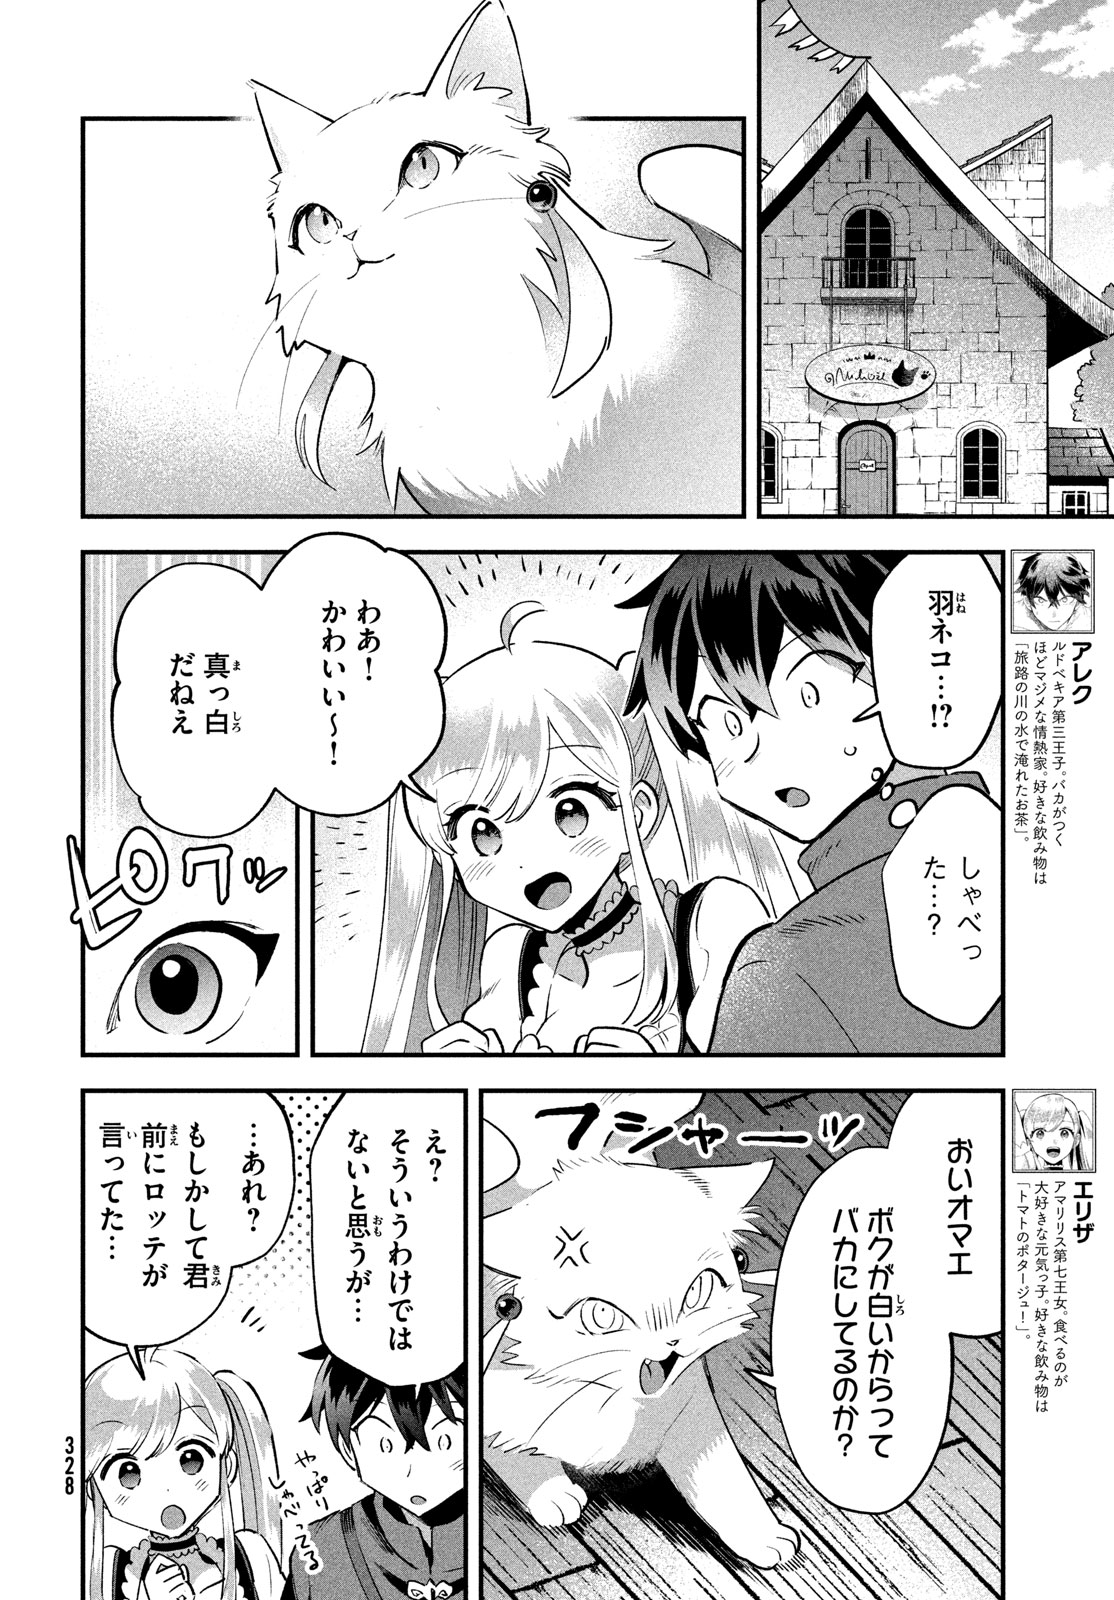 7-nin no Nemuri Hime - Chapter 43 - Page 2